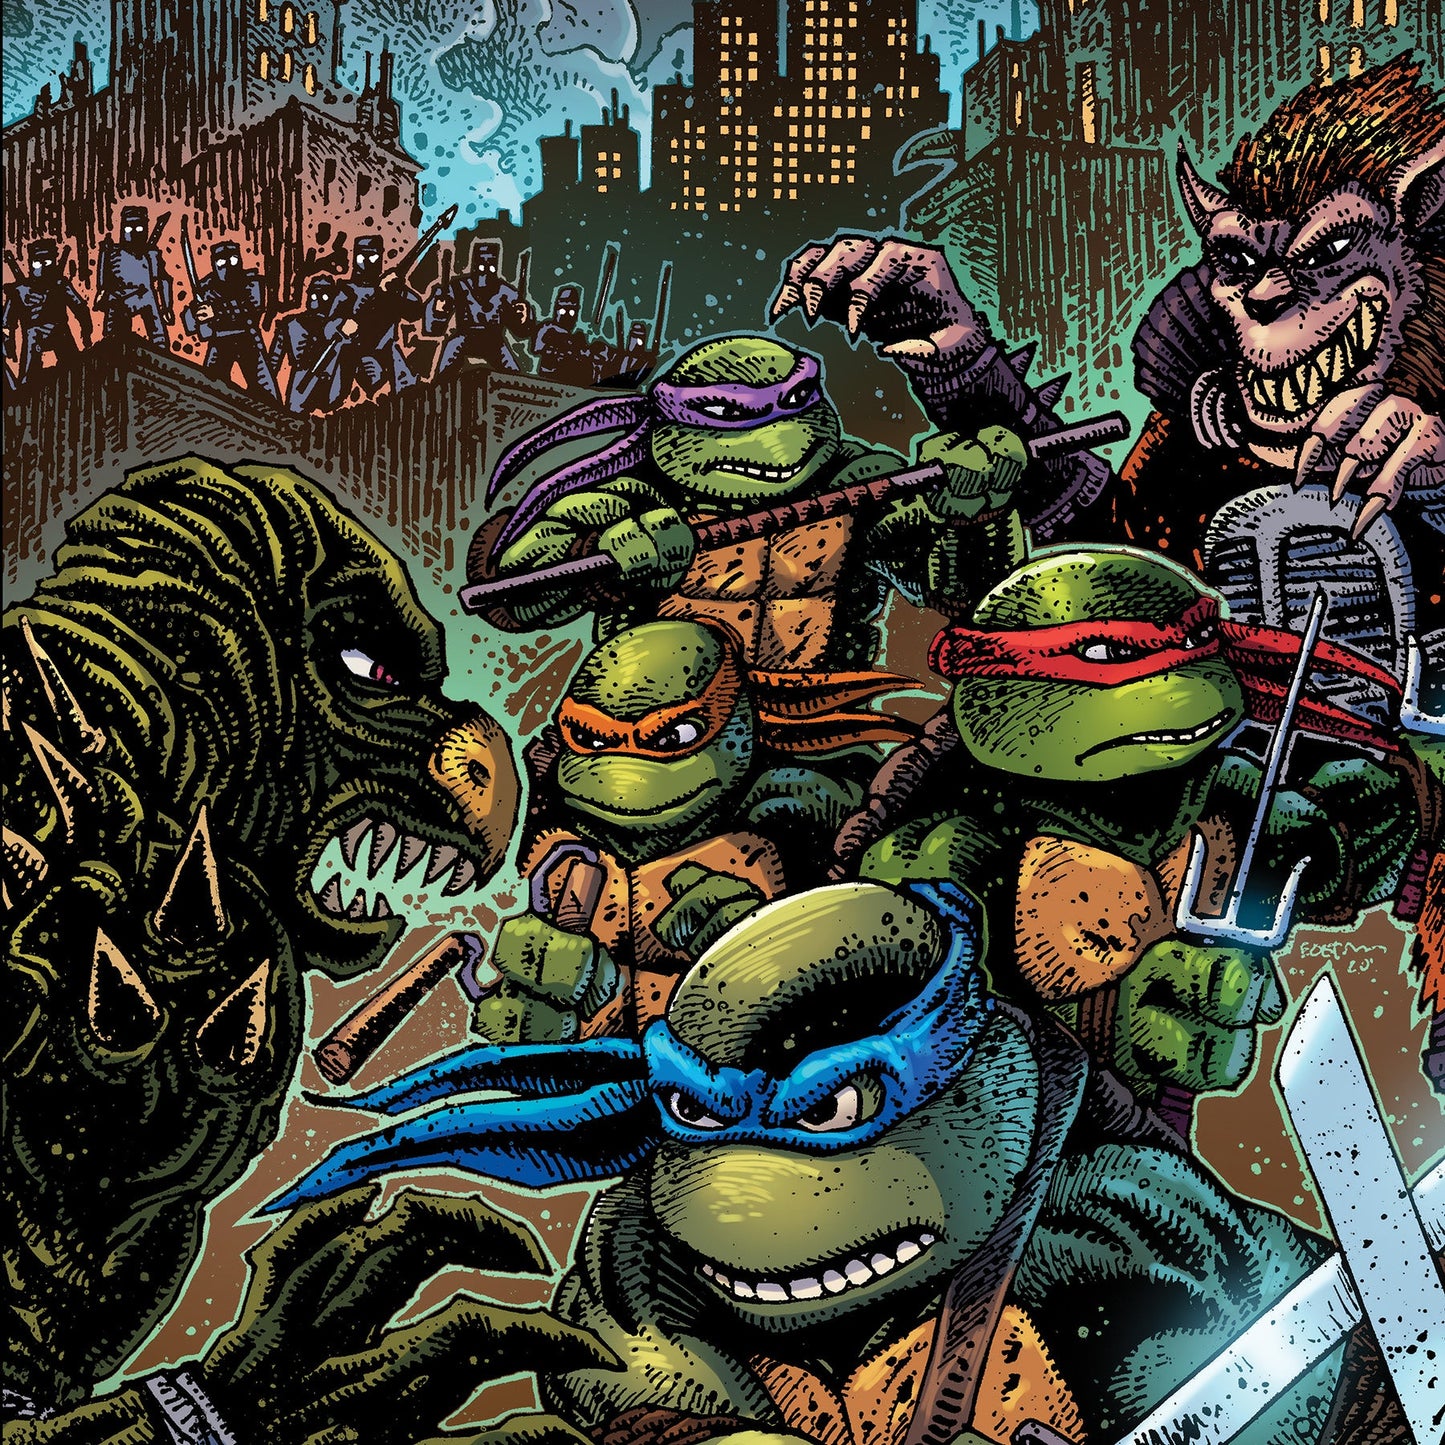 John Du Prez - Teenage Mutant Ninja Turtles II: Secret of the Ooze OST (Green/Purple Super Shredder & Turtles Brawl Vinyl)